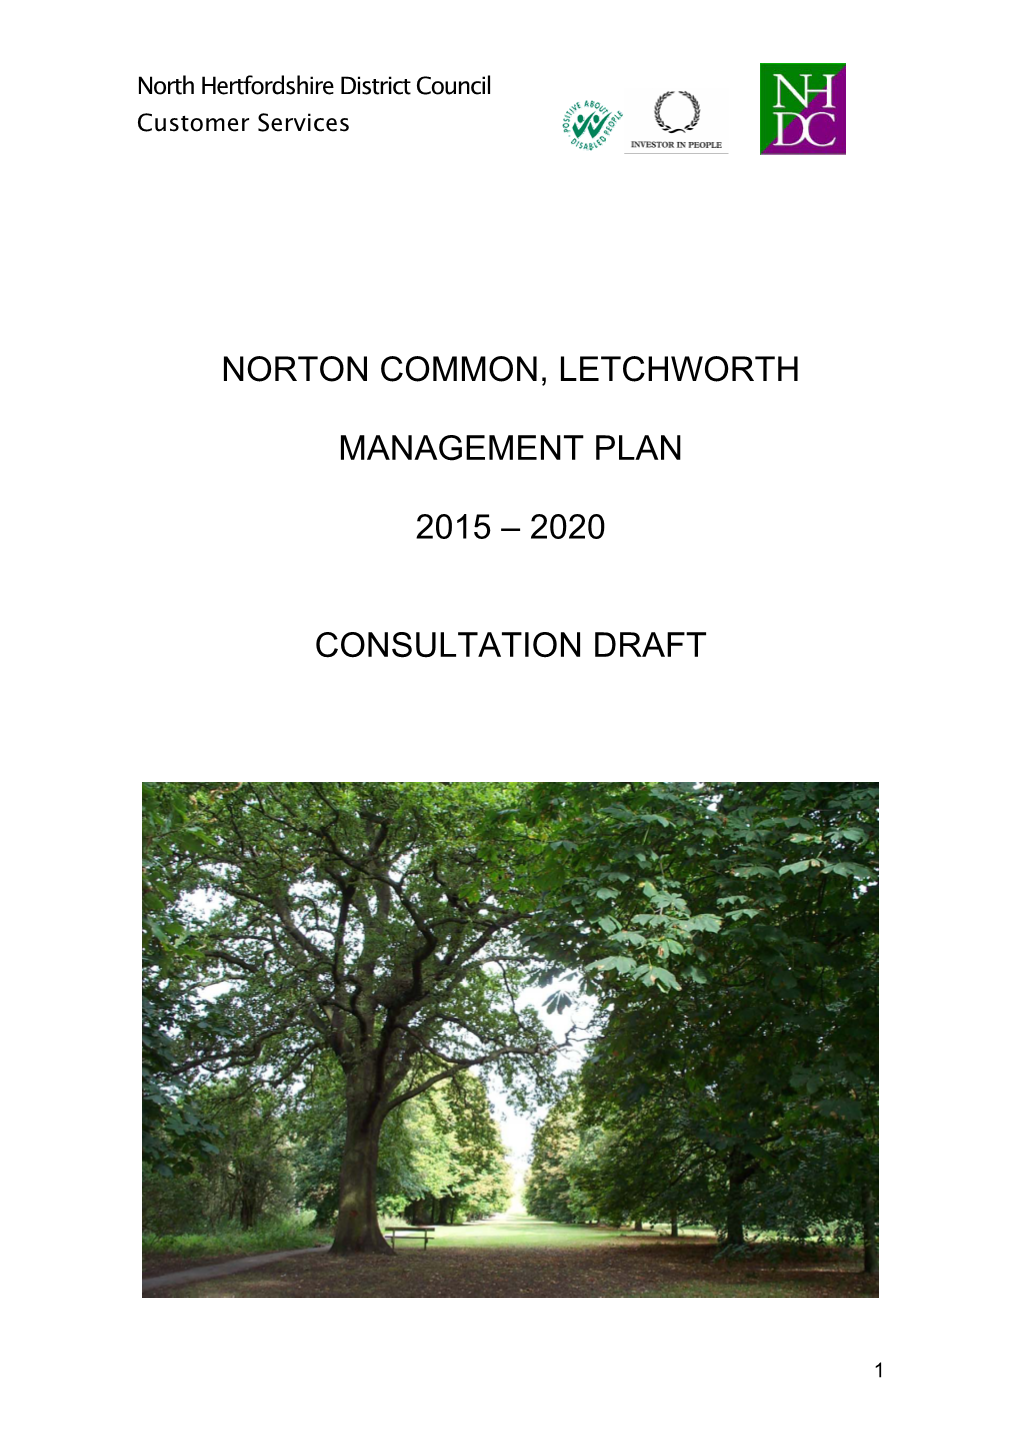 Norton Common, Letchworth Management Plan 2015